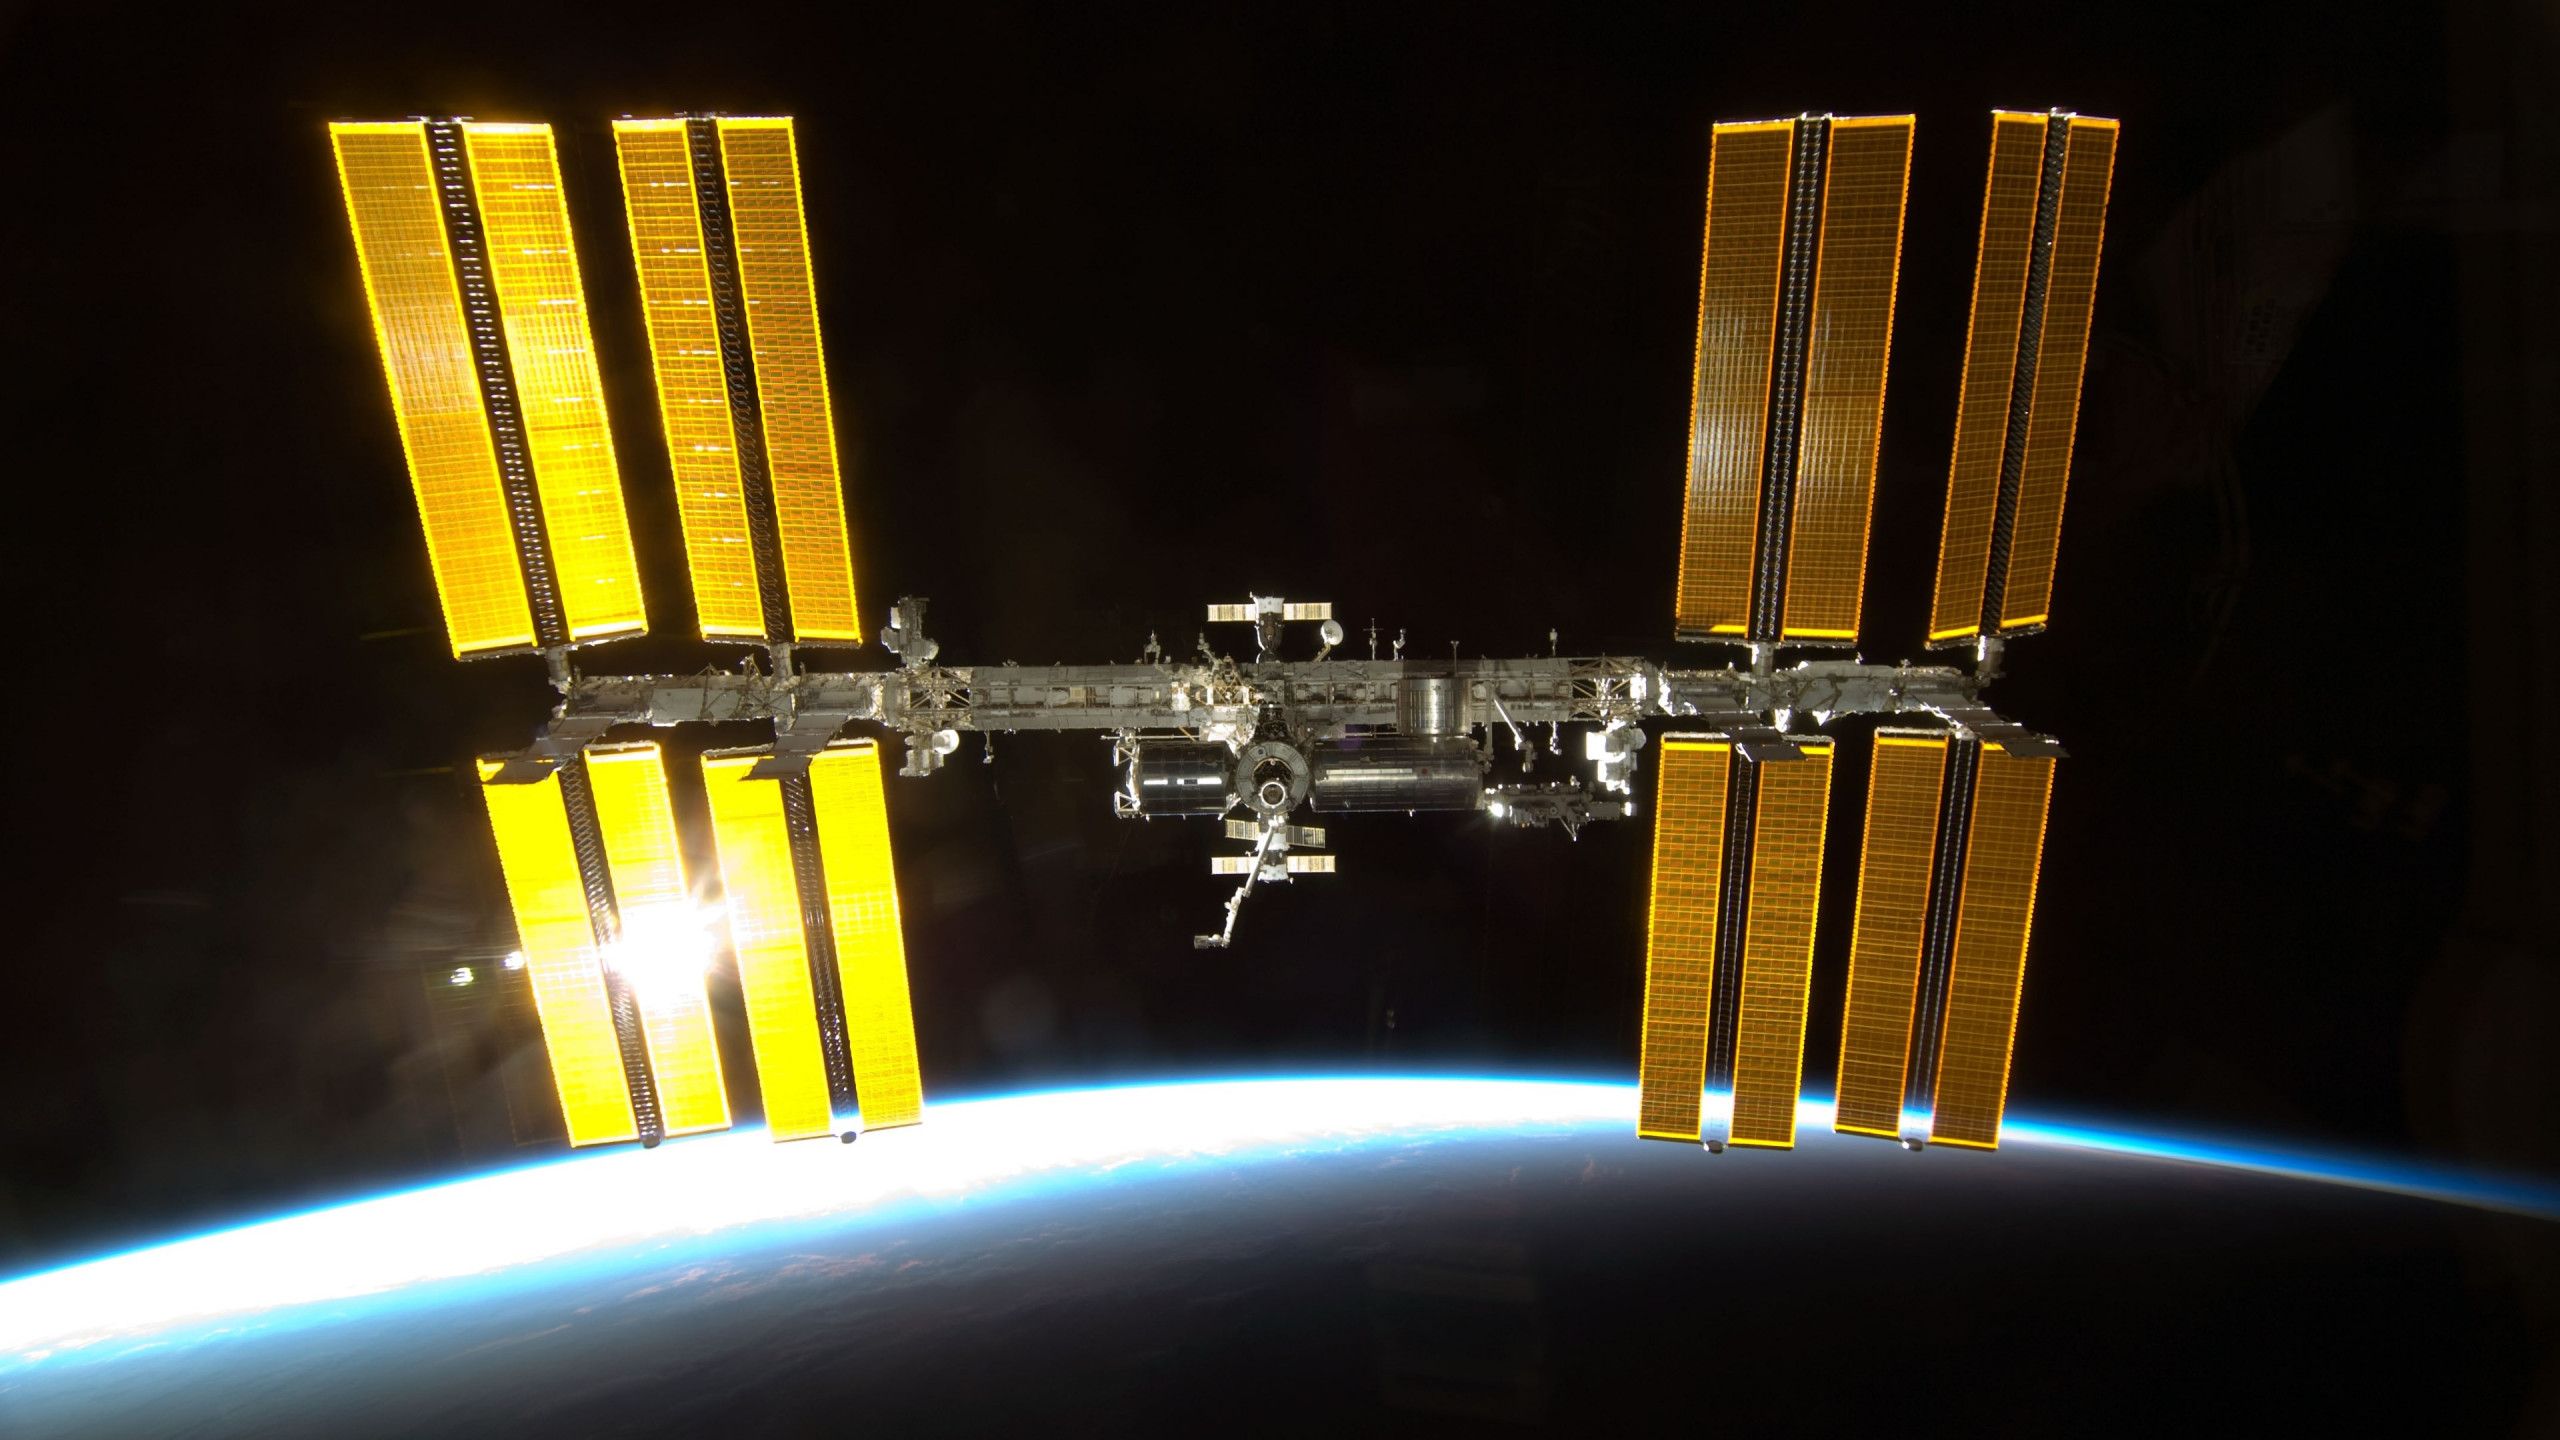 Download wallpaper: International Space Station 2560x1440